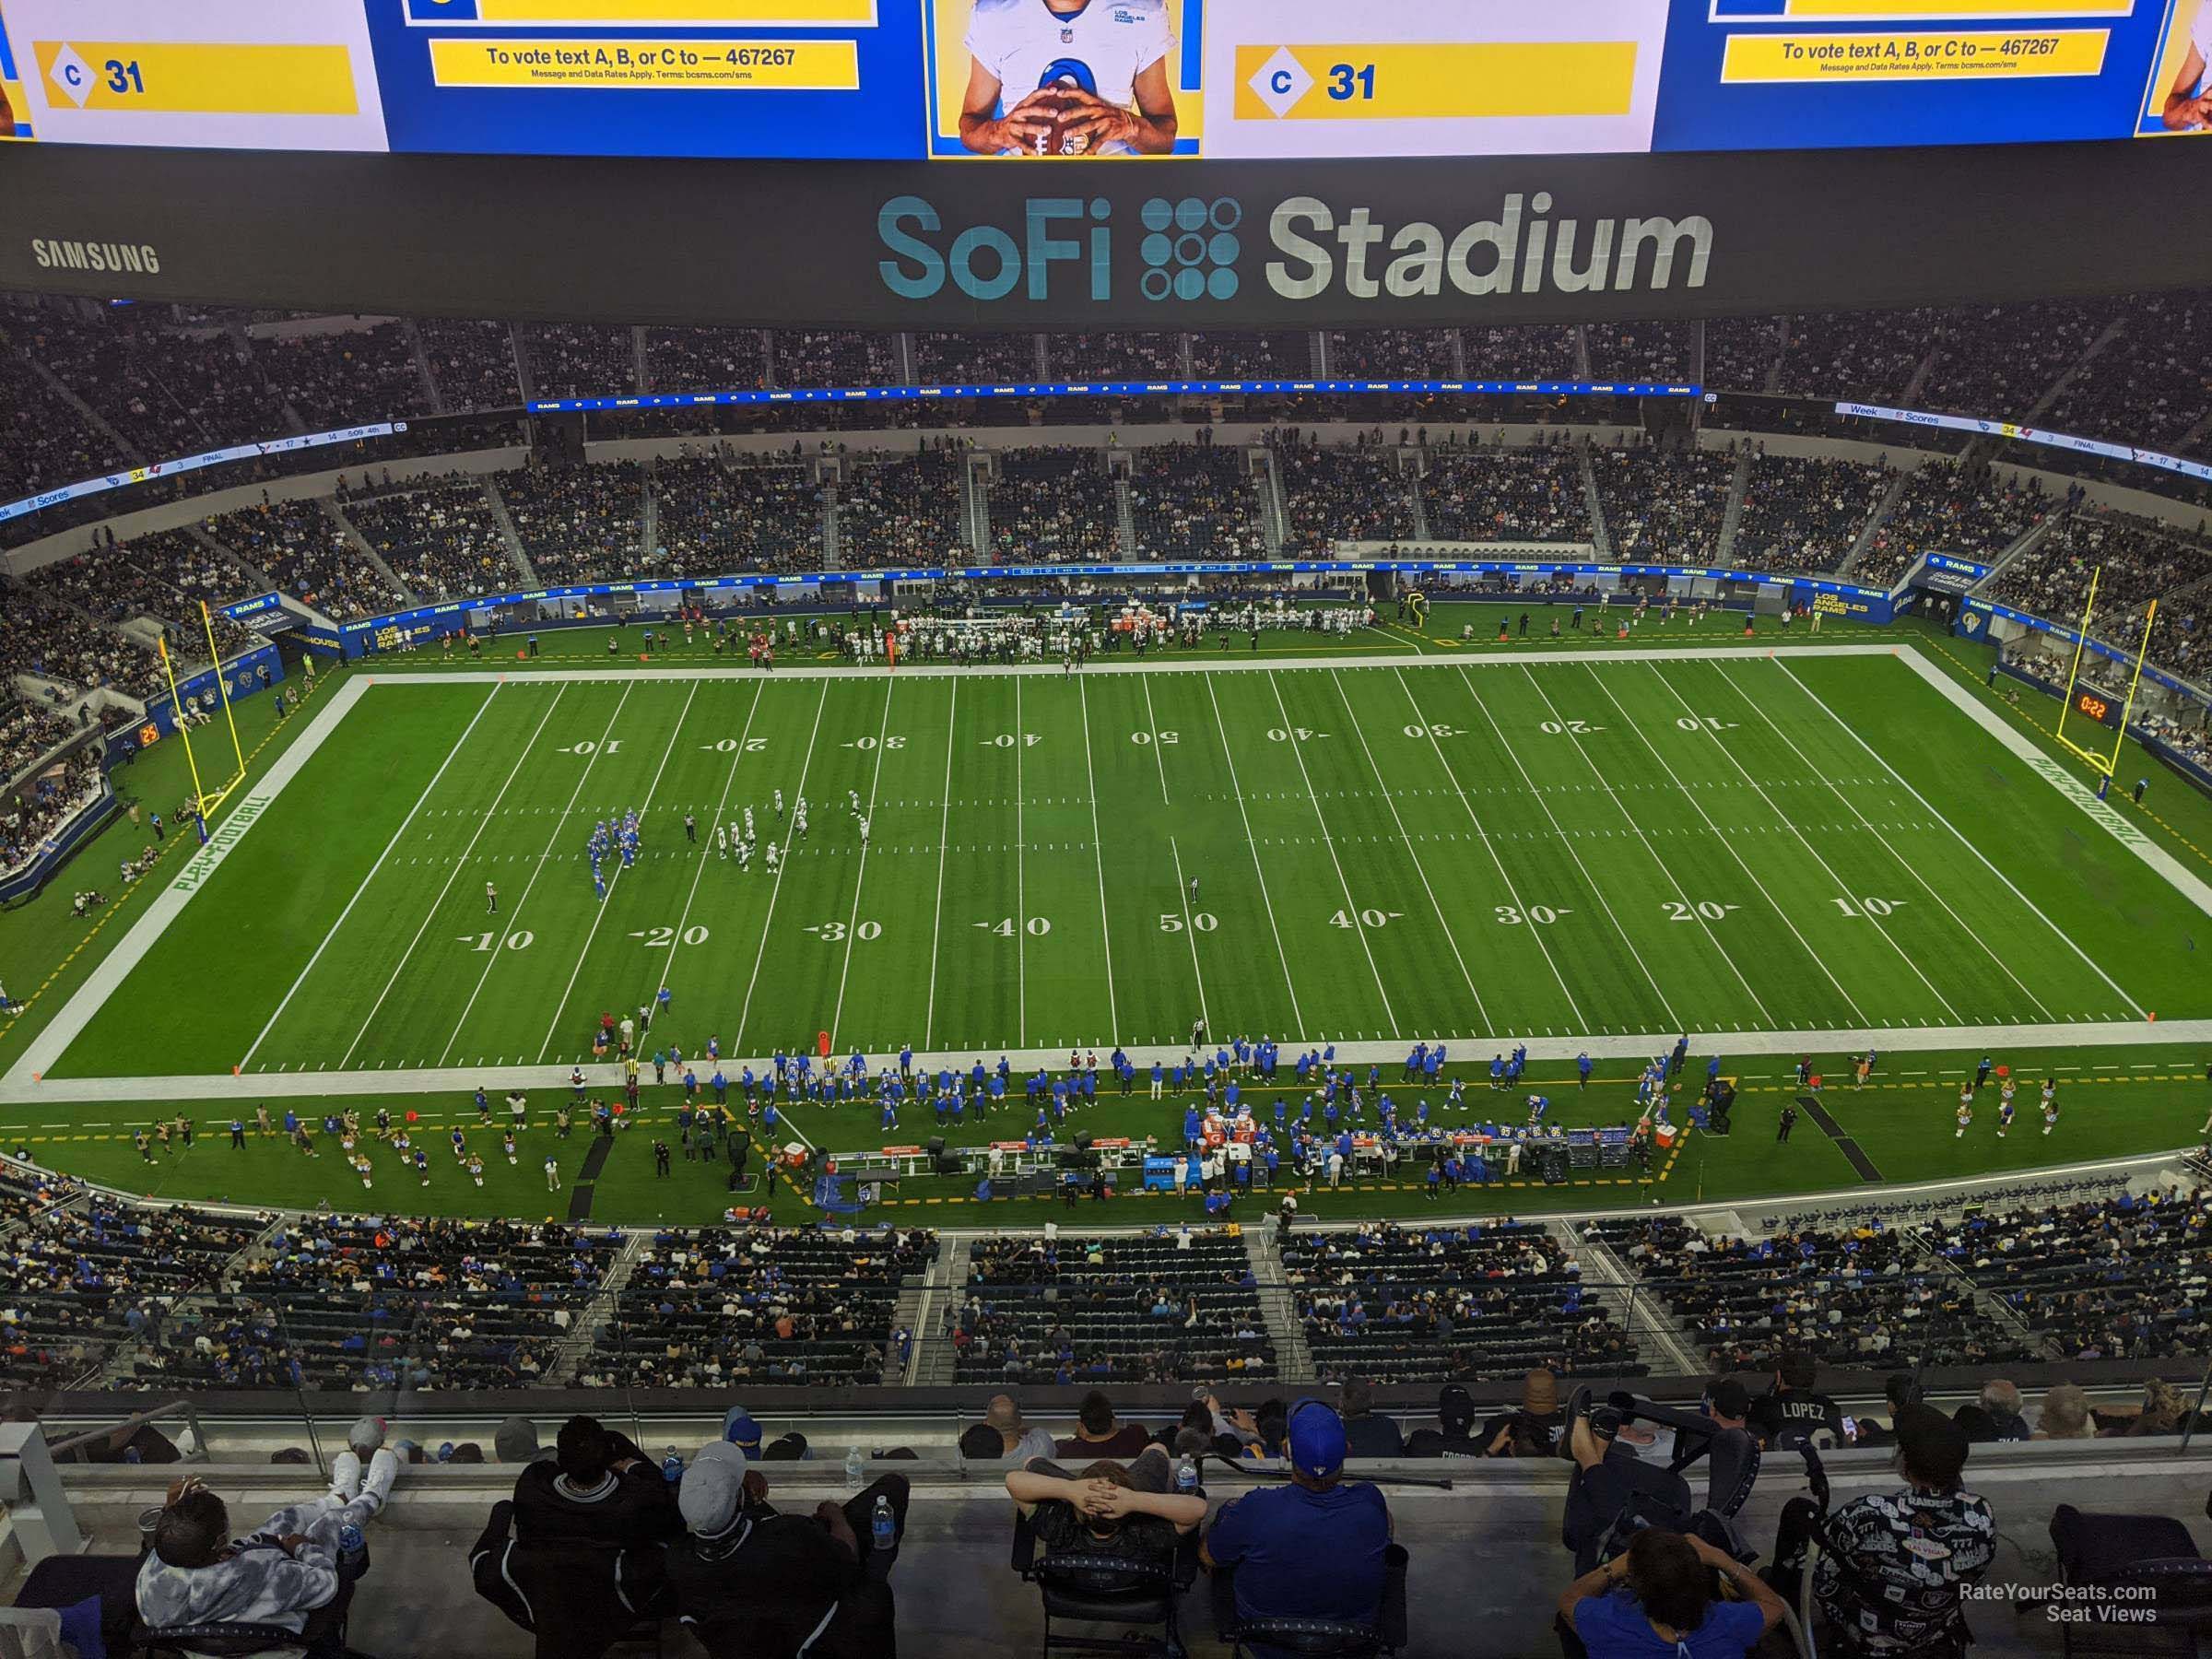 section 539, row 3 seat view  for football - sofi stadium